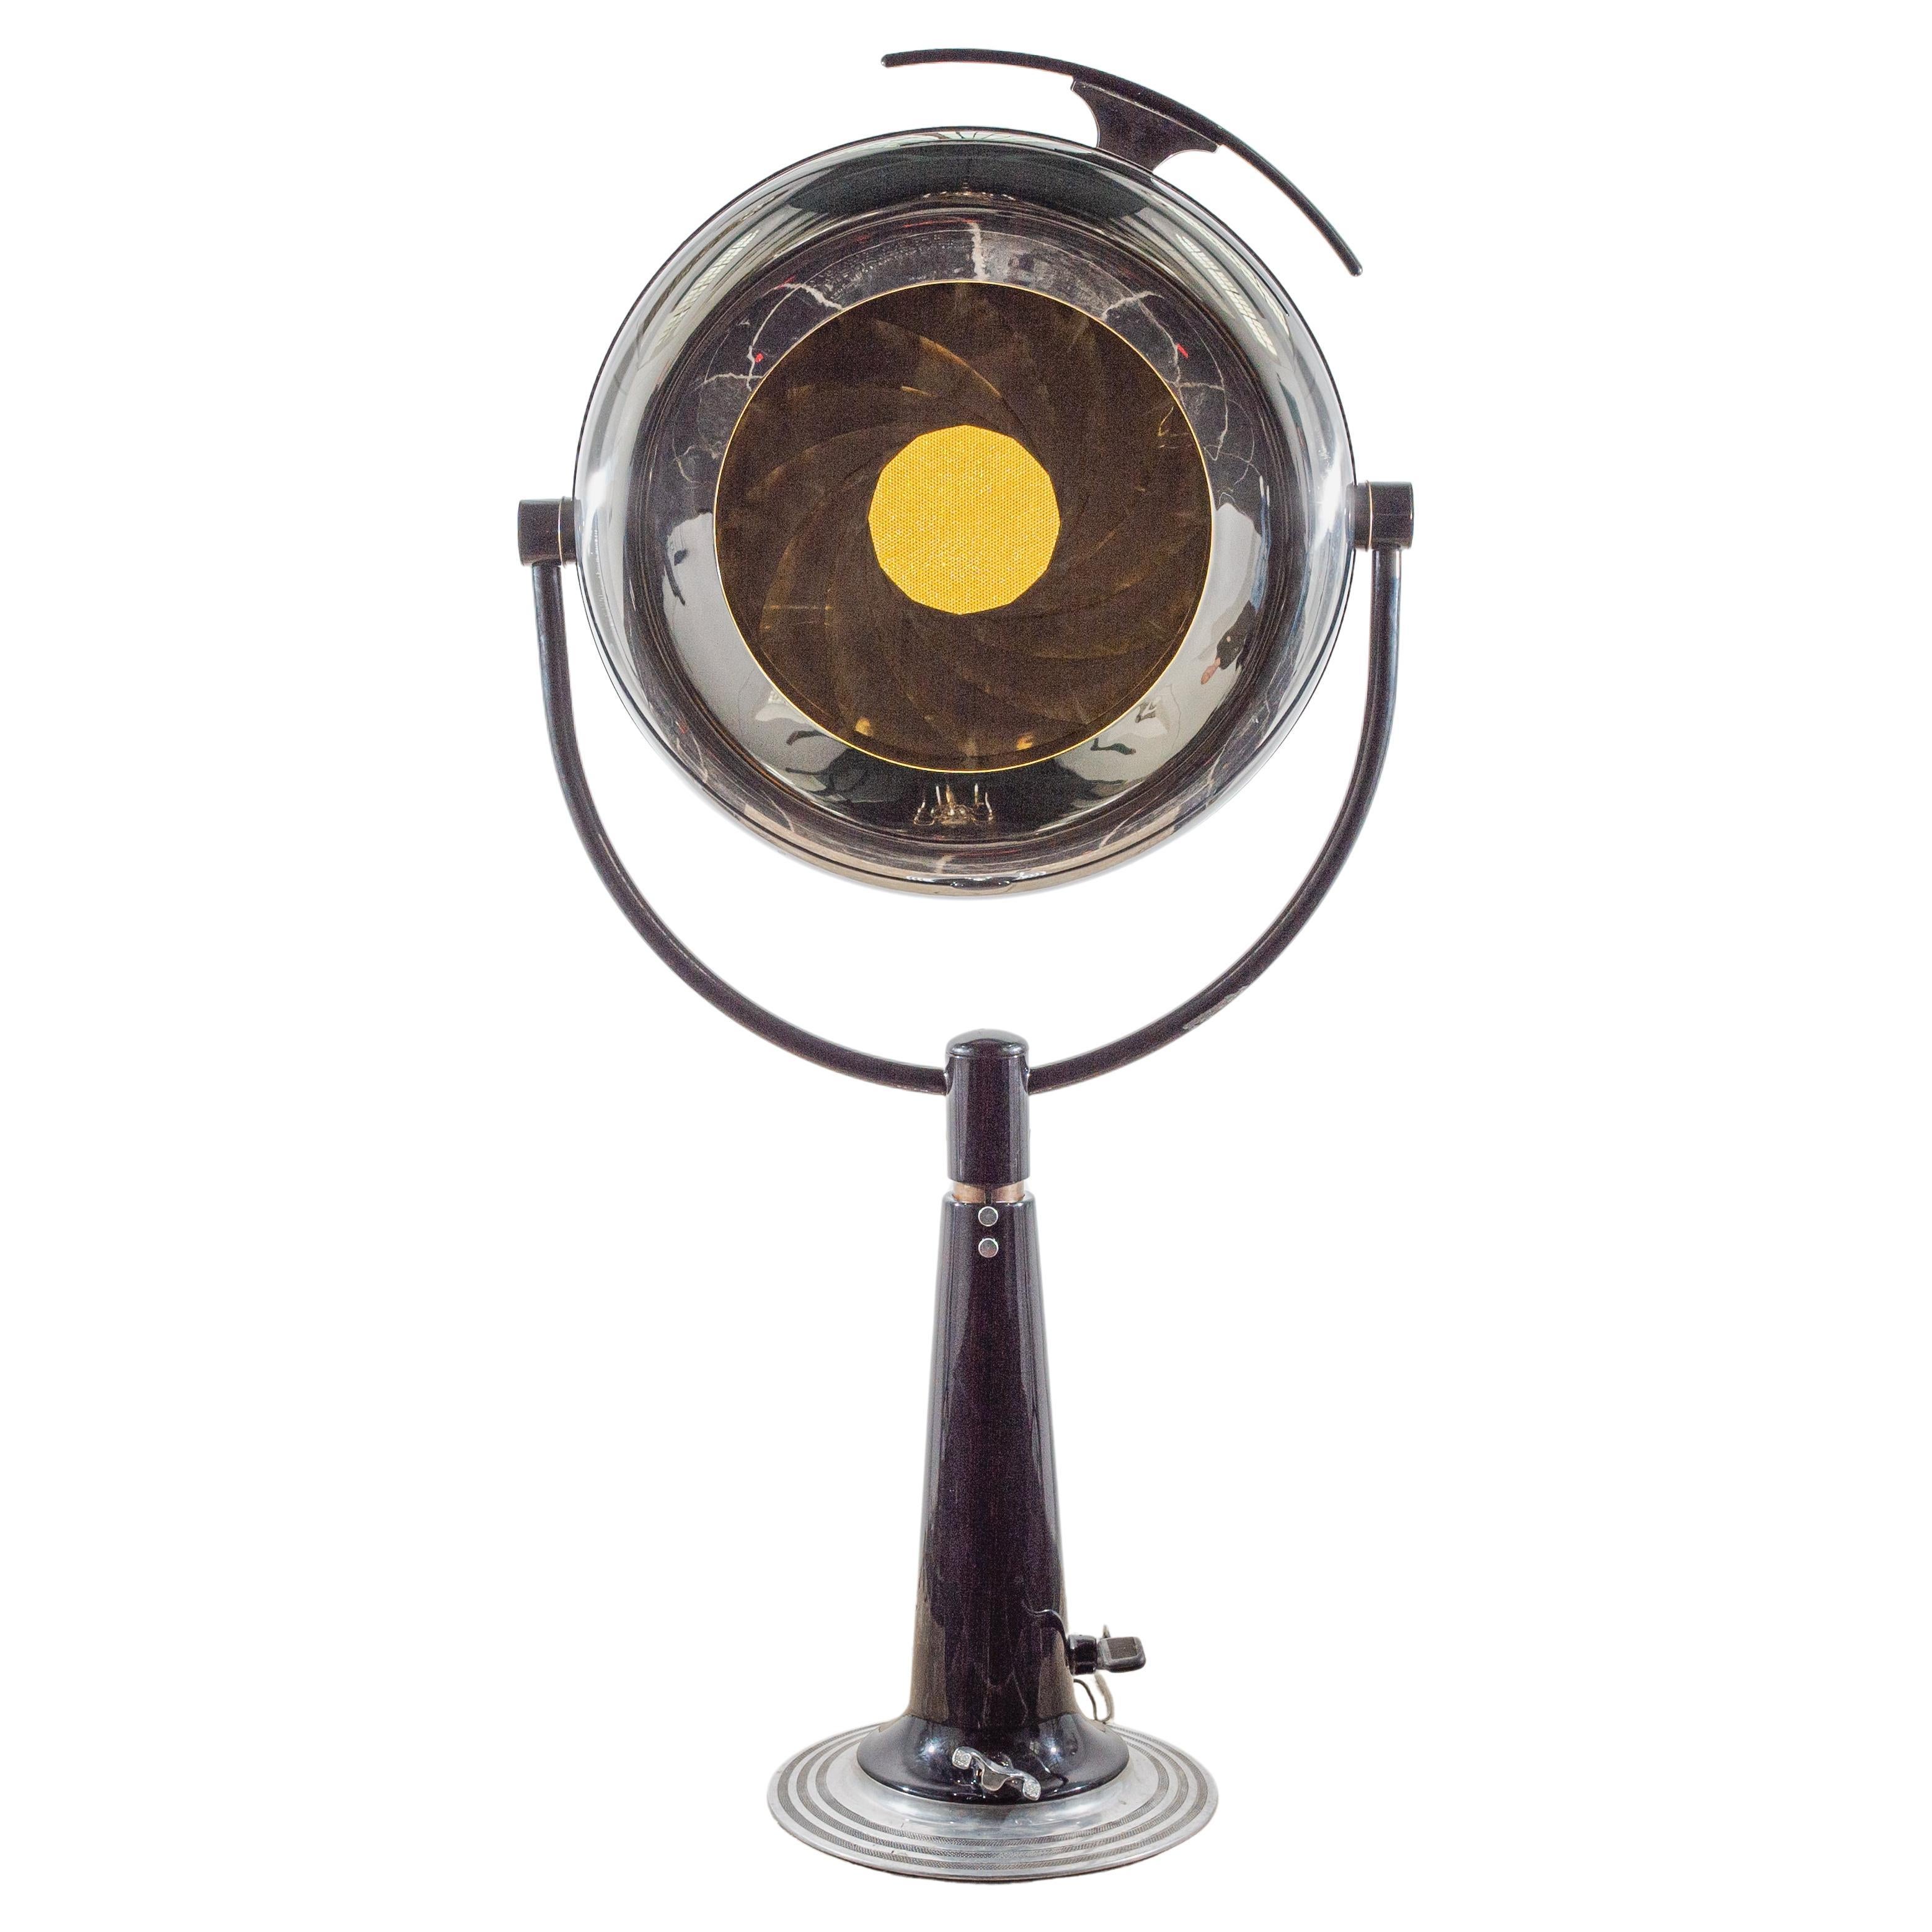 Aperture Lamp, Sculptural Lamp with Copper Diafragma